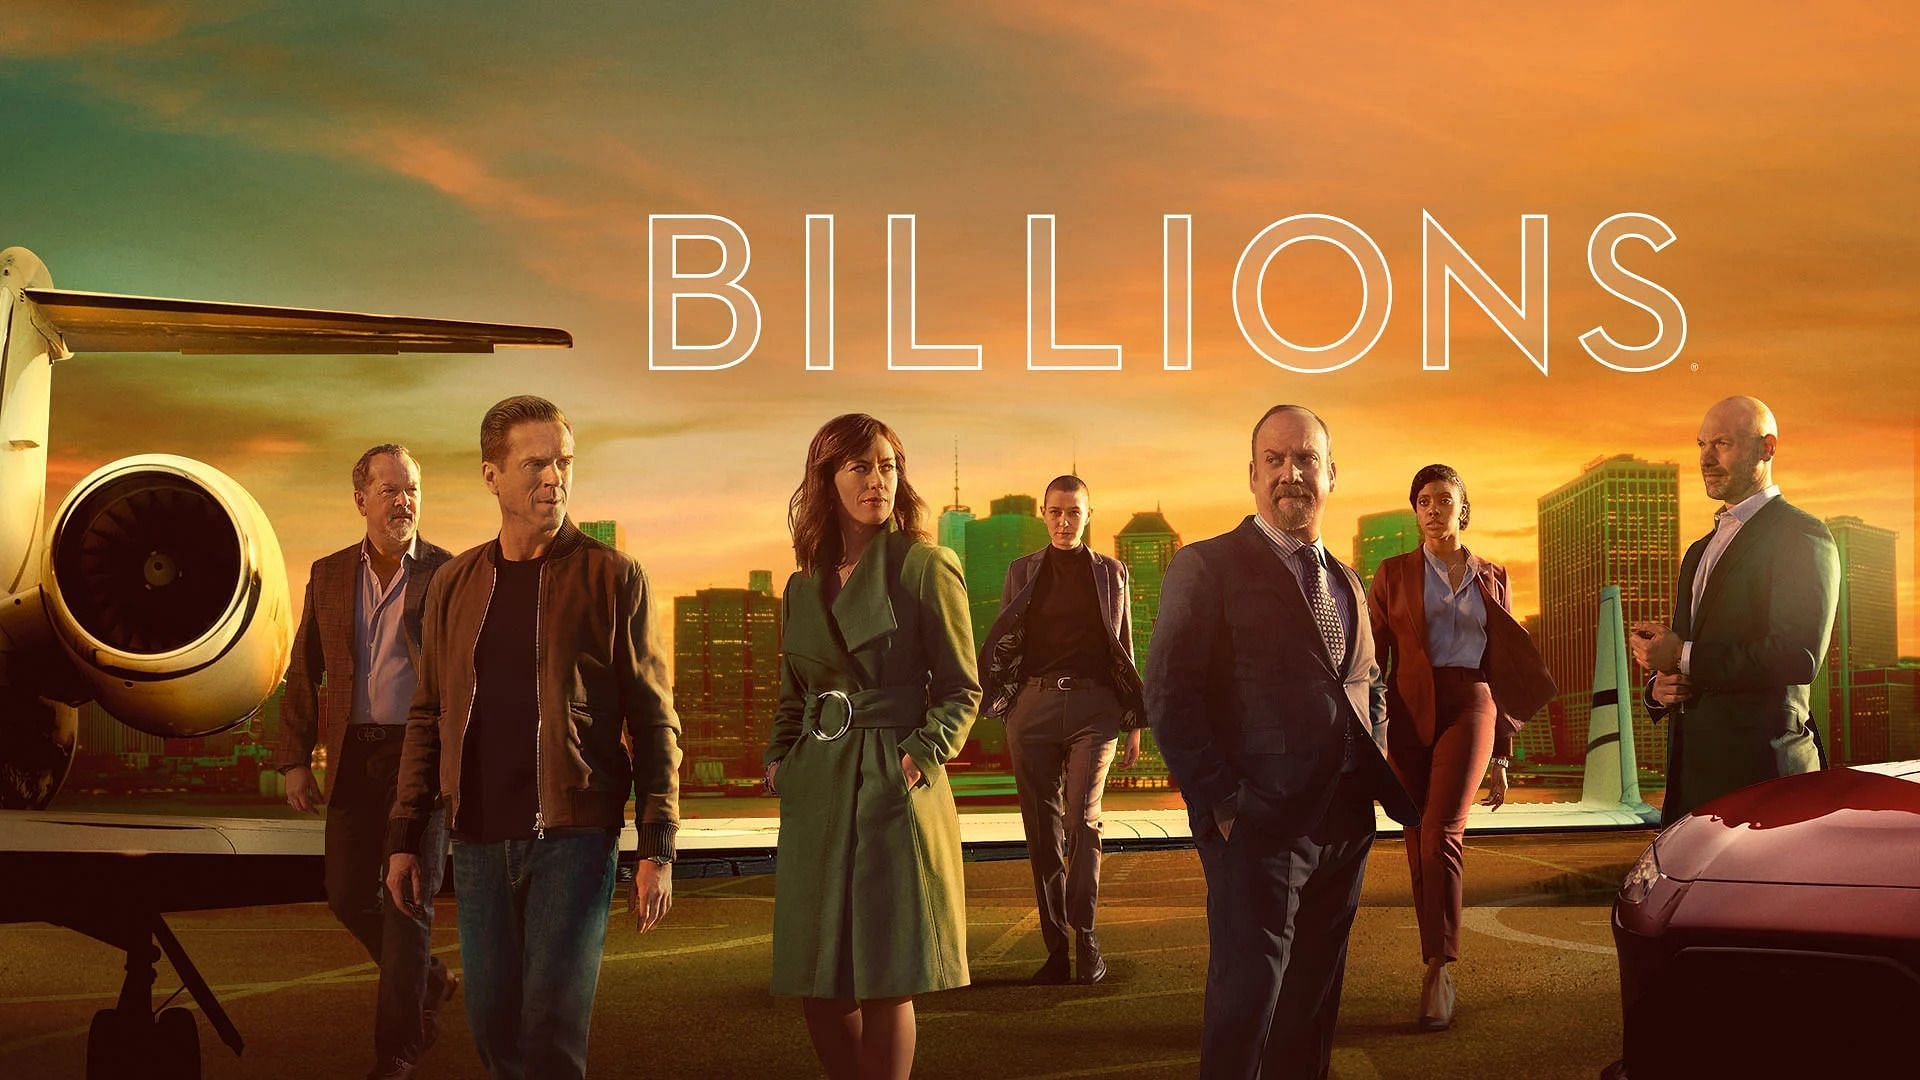 Billions season 6, episode 6 Release date, trailer, and more